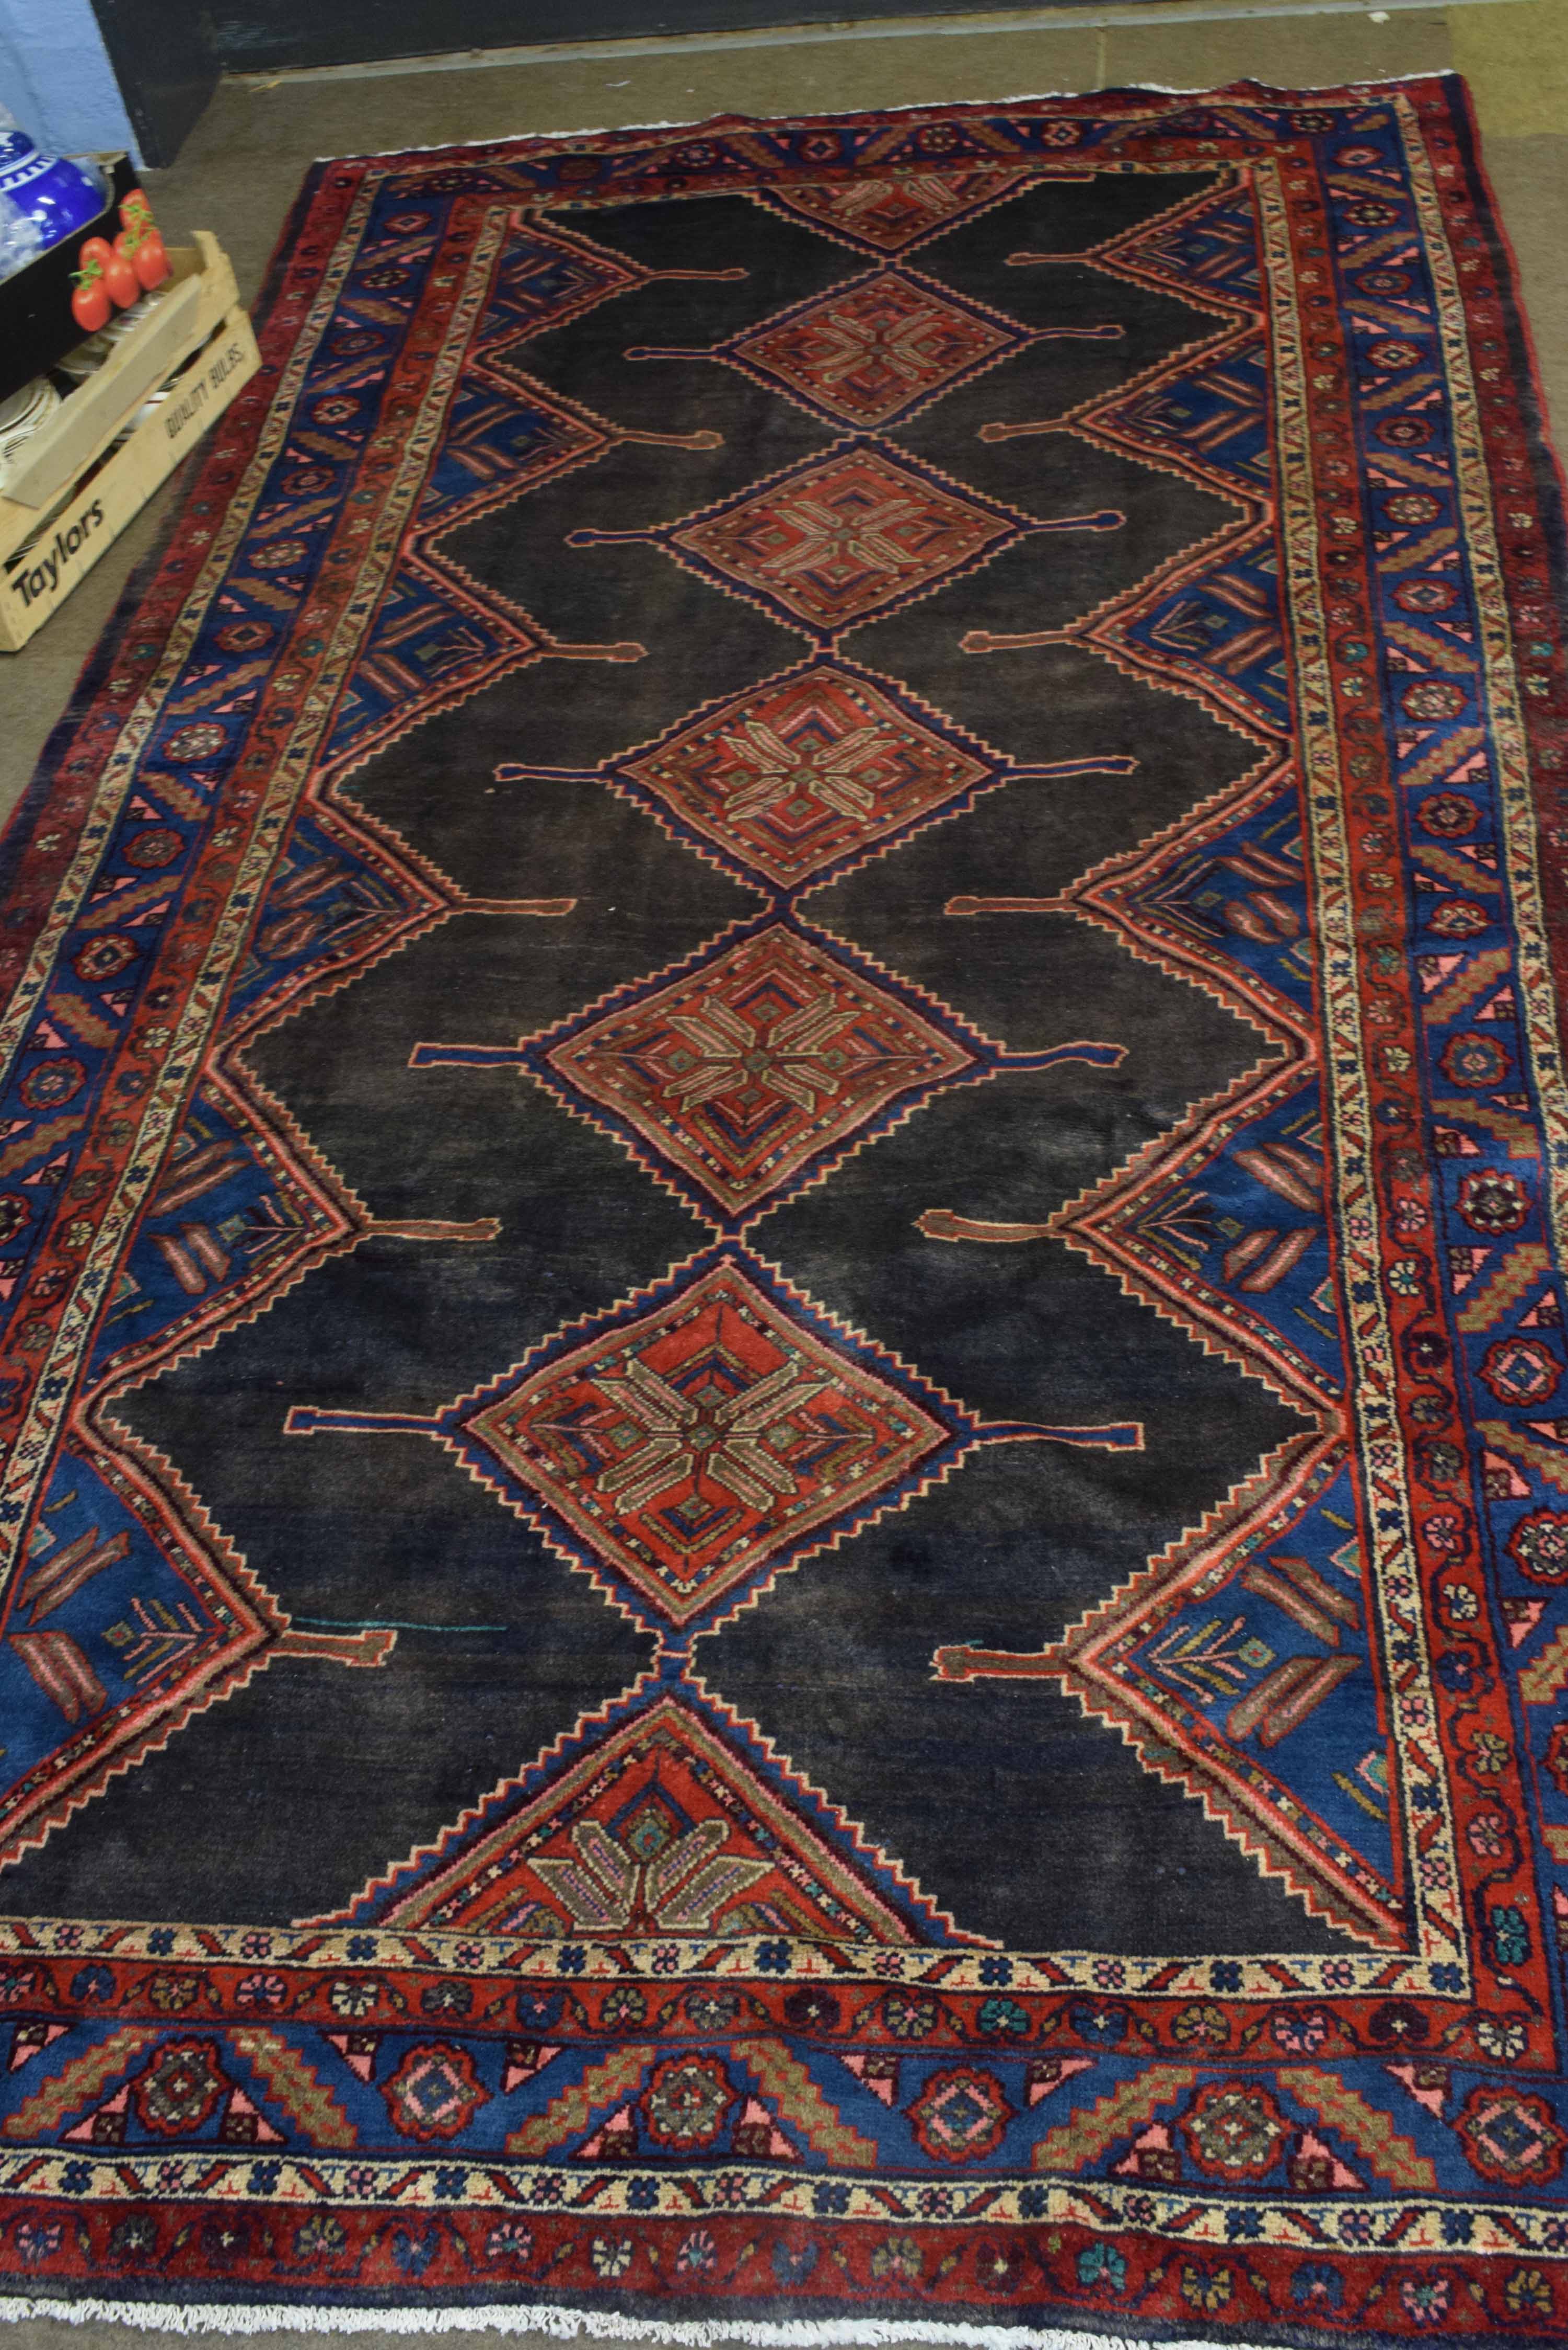 Araak carpet, 2.82m x 1.65m - Image 3 of 3